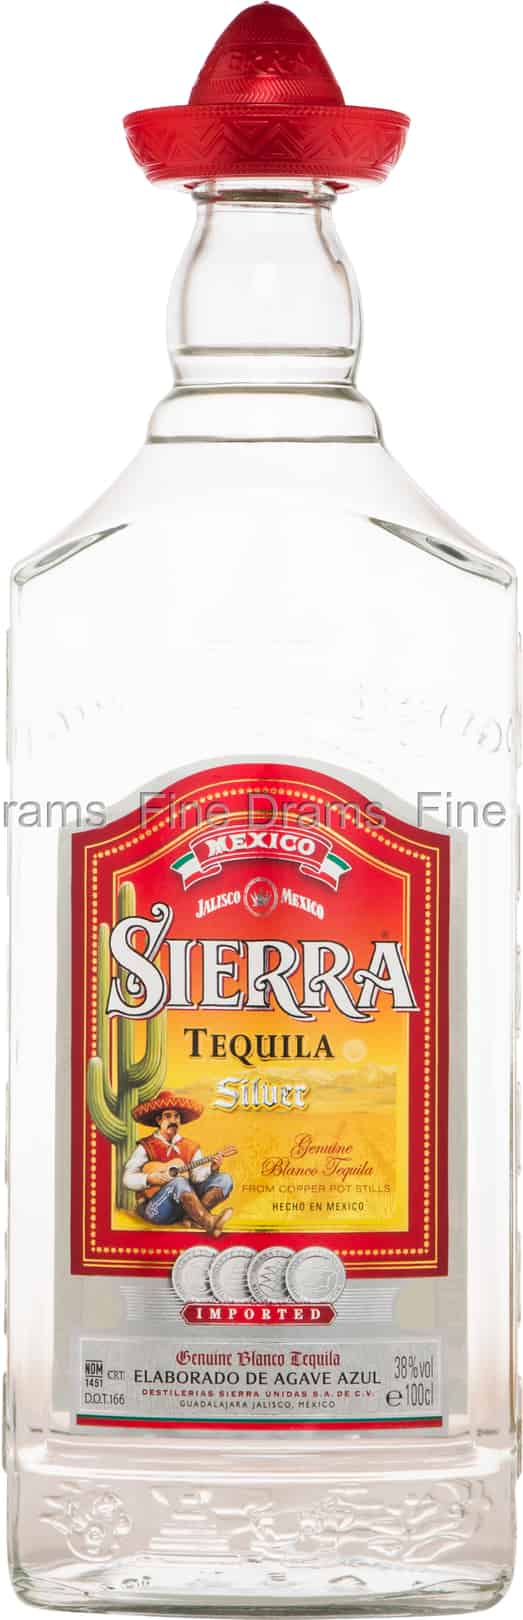 Sierra Silver Tequila (1 Liter)